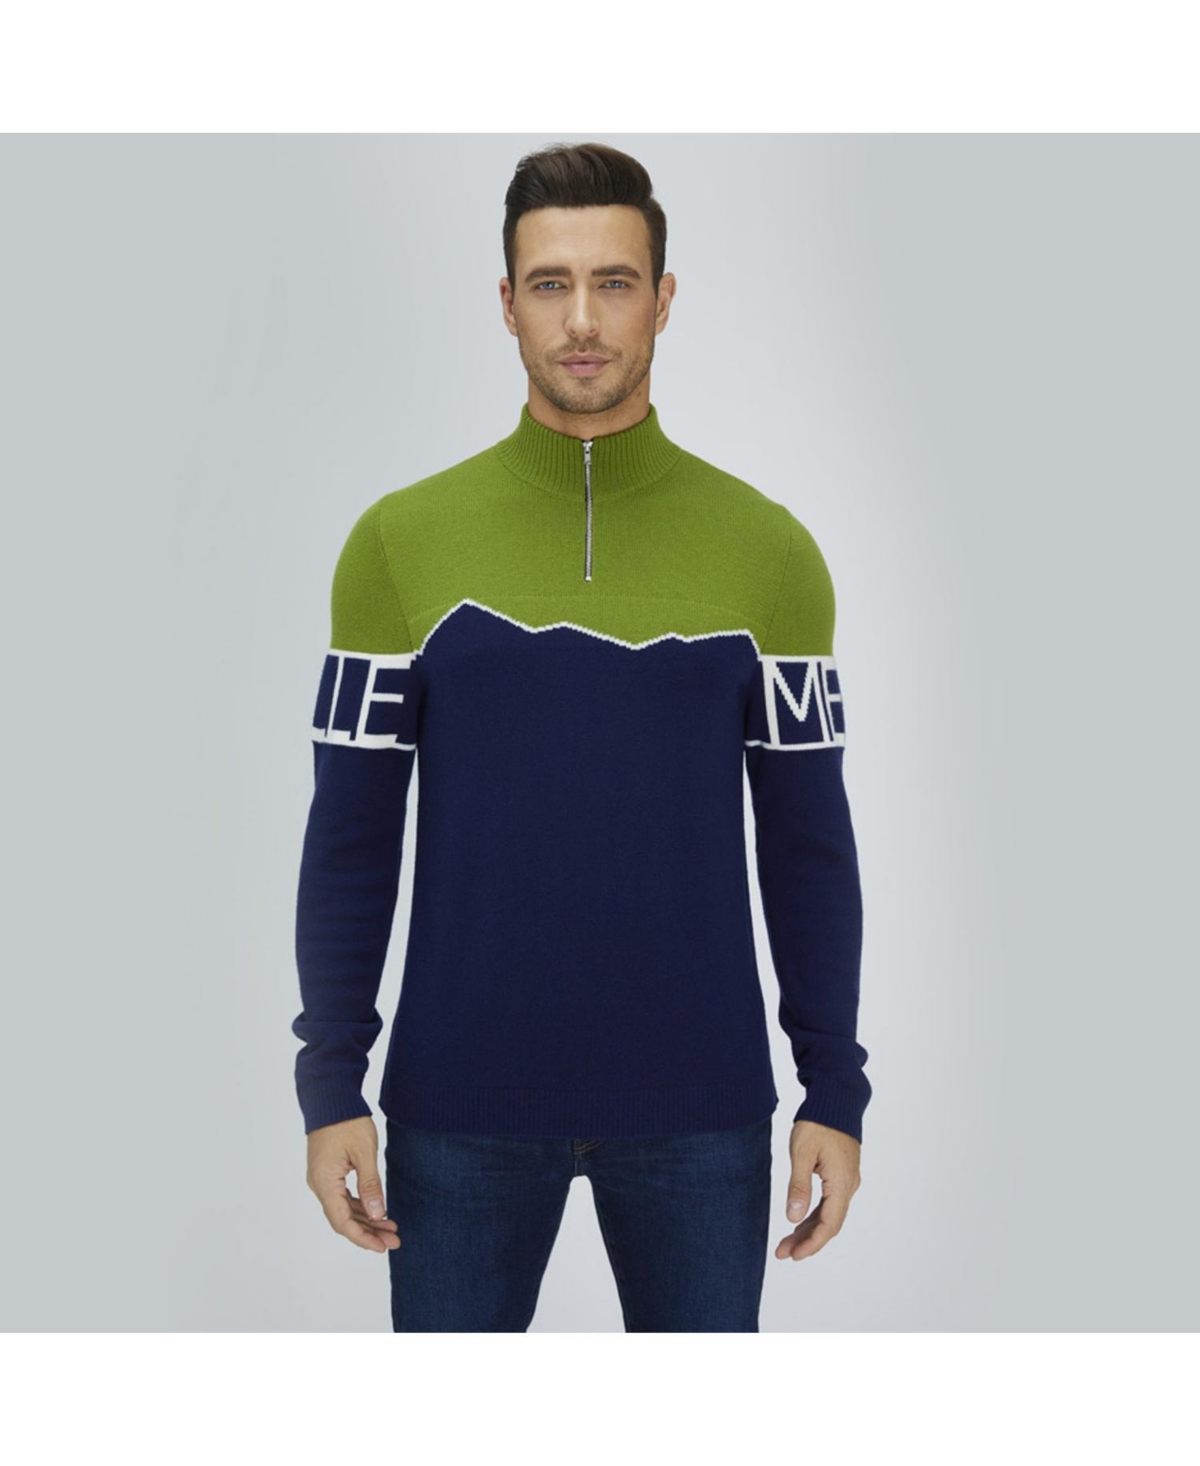 Men's Bellemere Merino Super Fine Mountain Print sweater - Dark blue/green